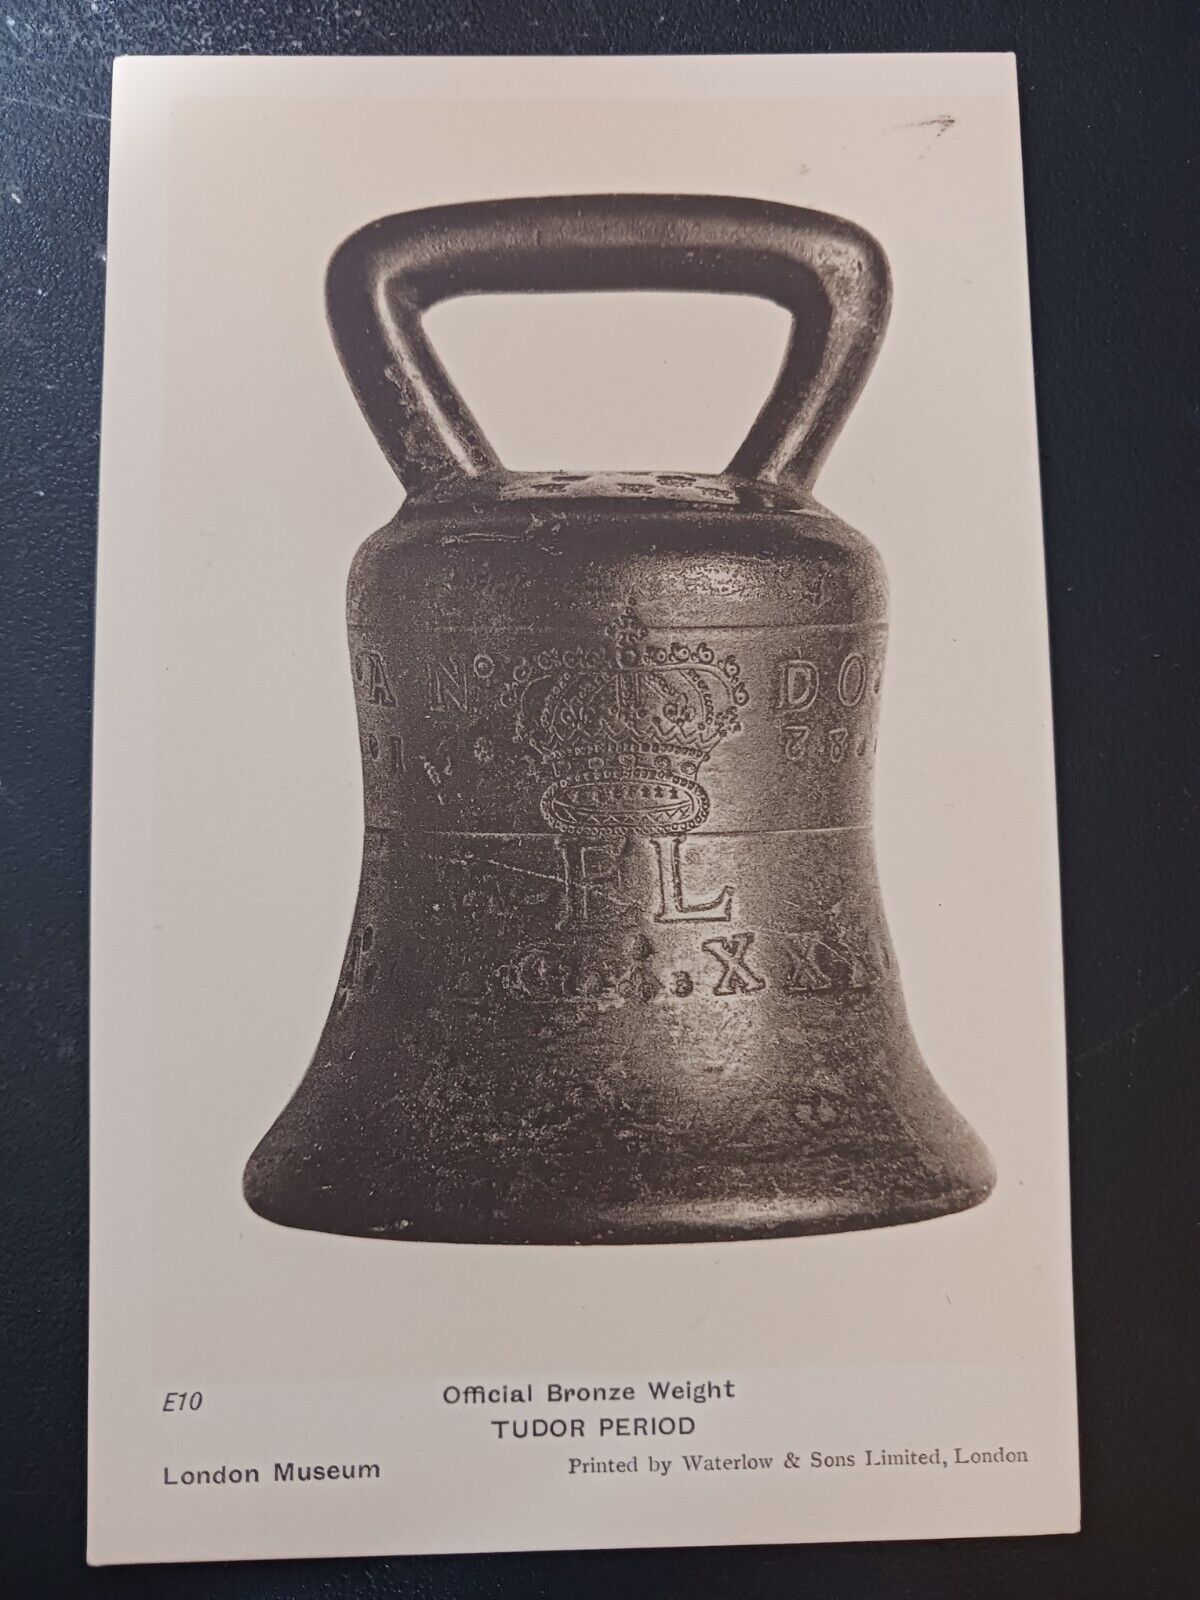 vtg postcard Official Bronze Weight Tudor Period London Museum  England